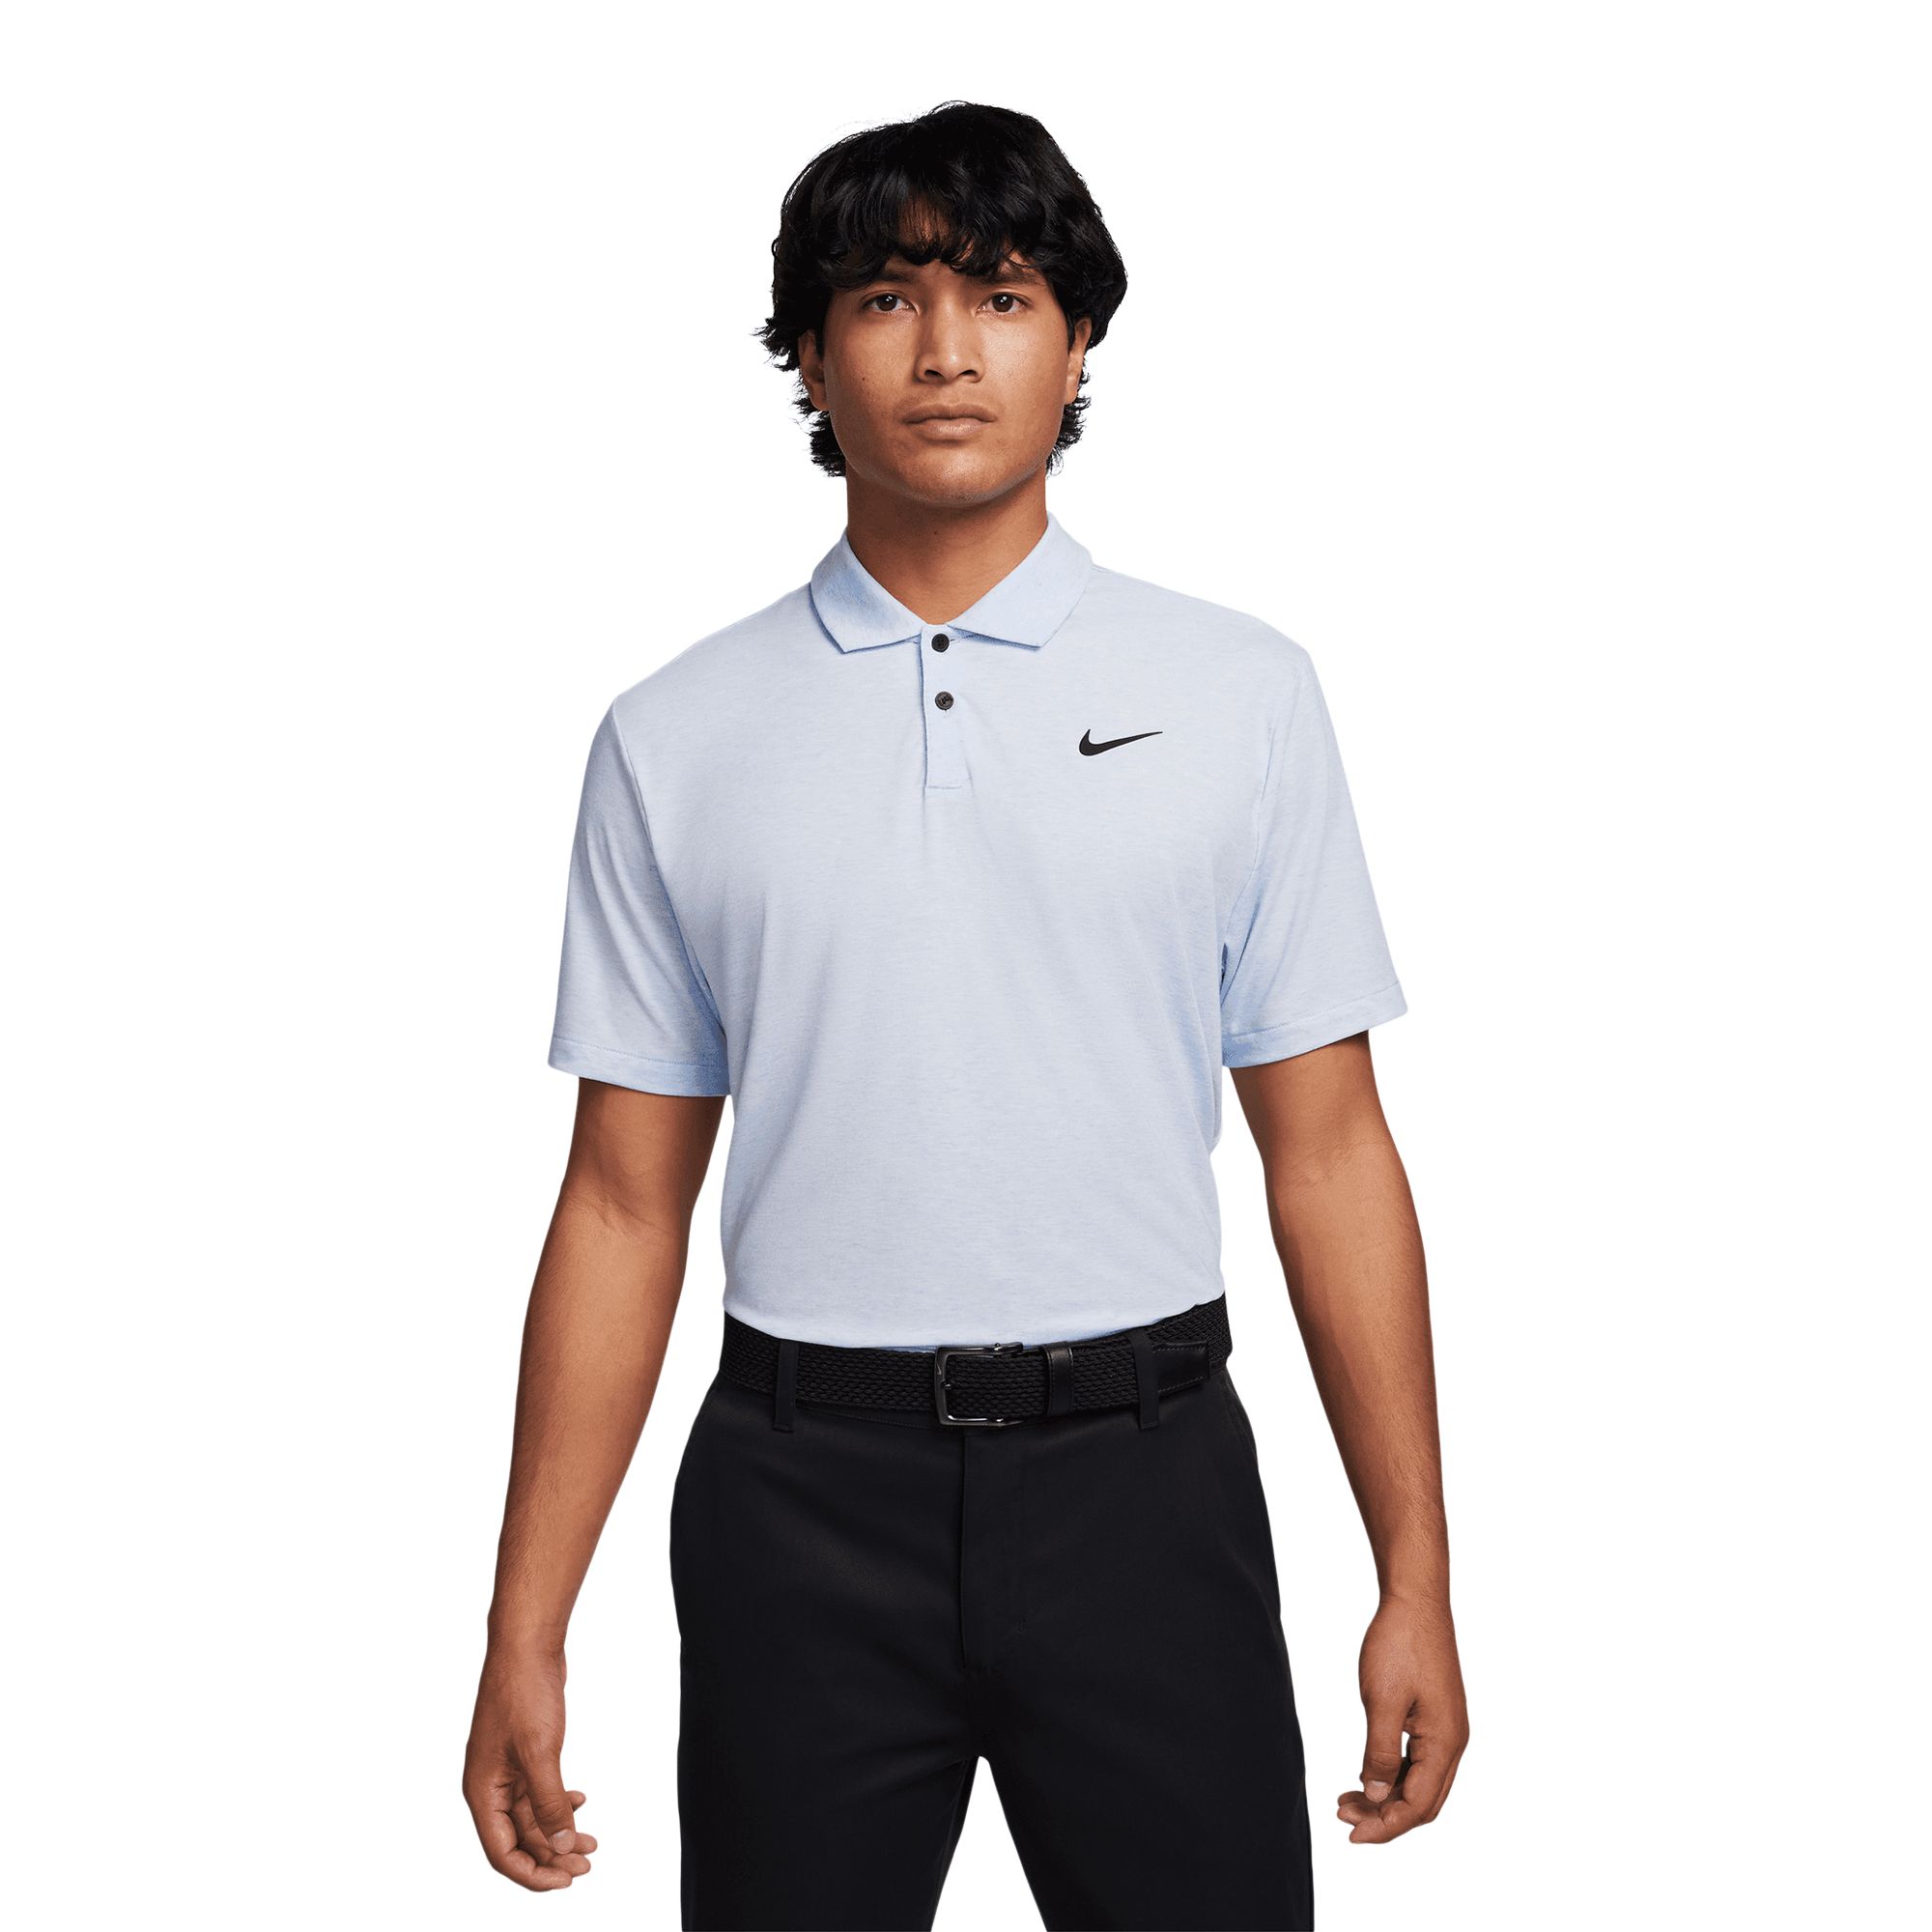 Image of Nike Golf Men's Dri-fit Tour Polo